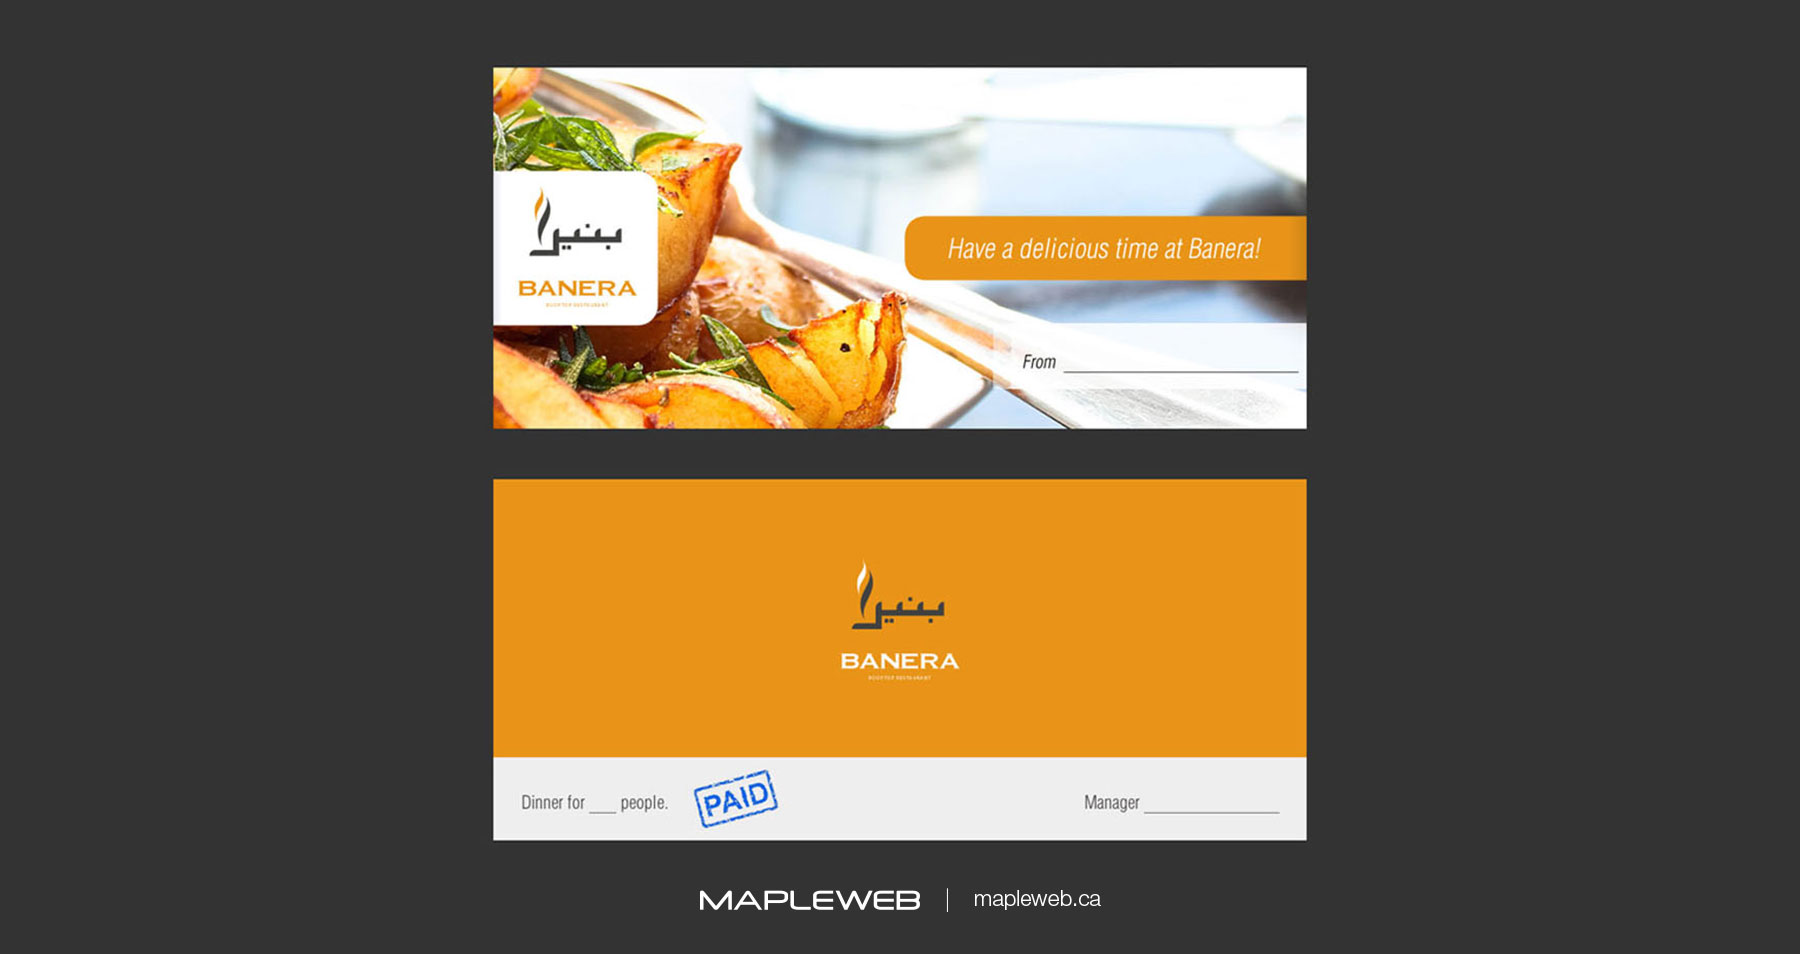 Banera RoofTop Envelope Brand design by Mapleweb